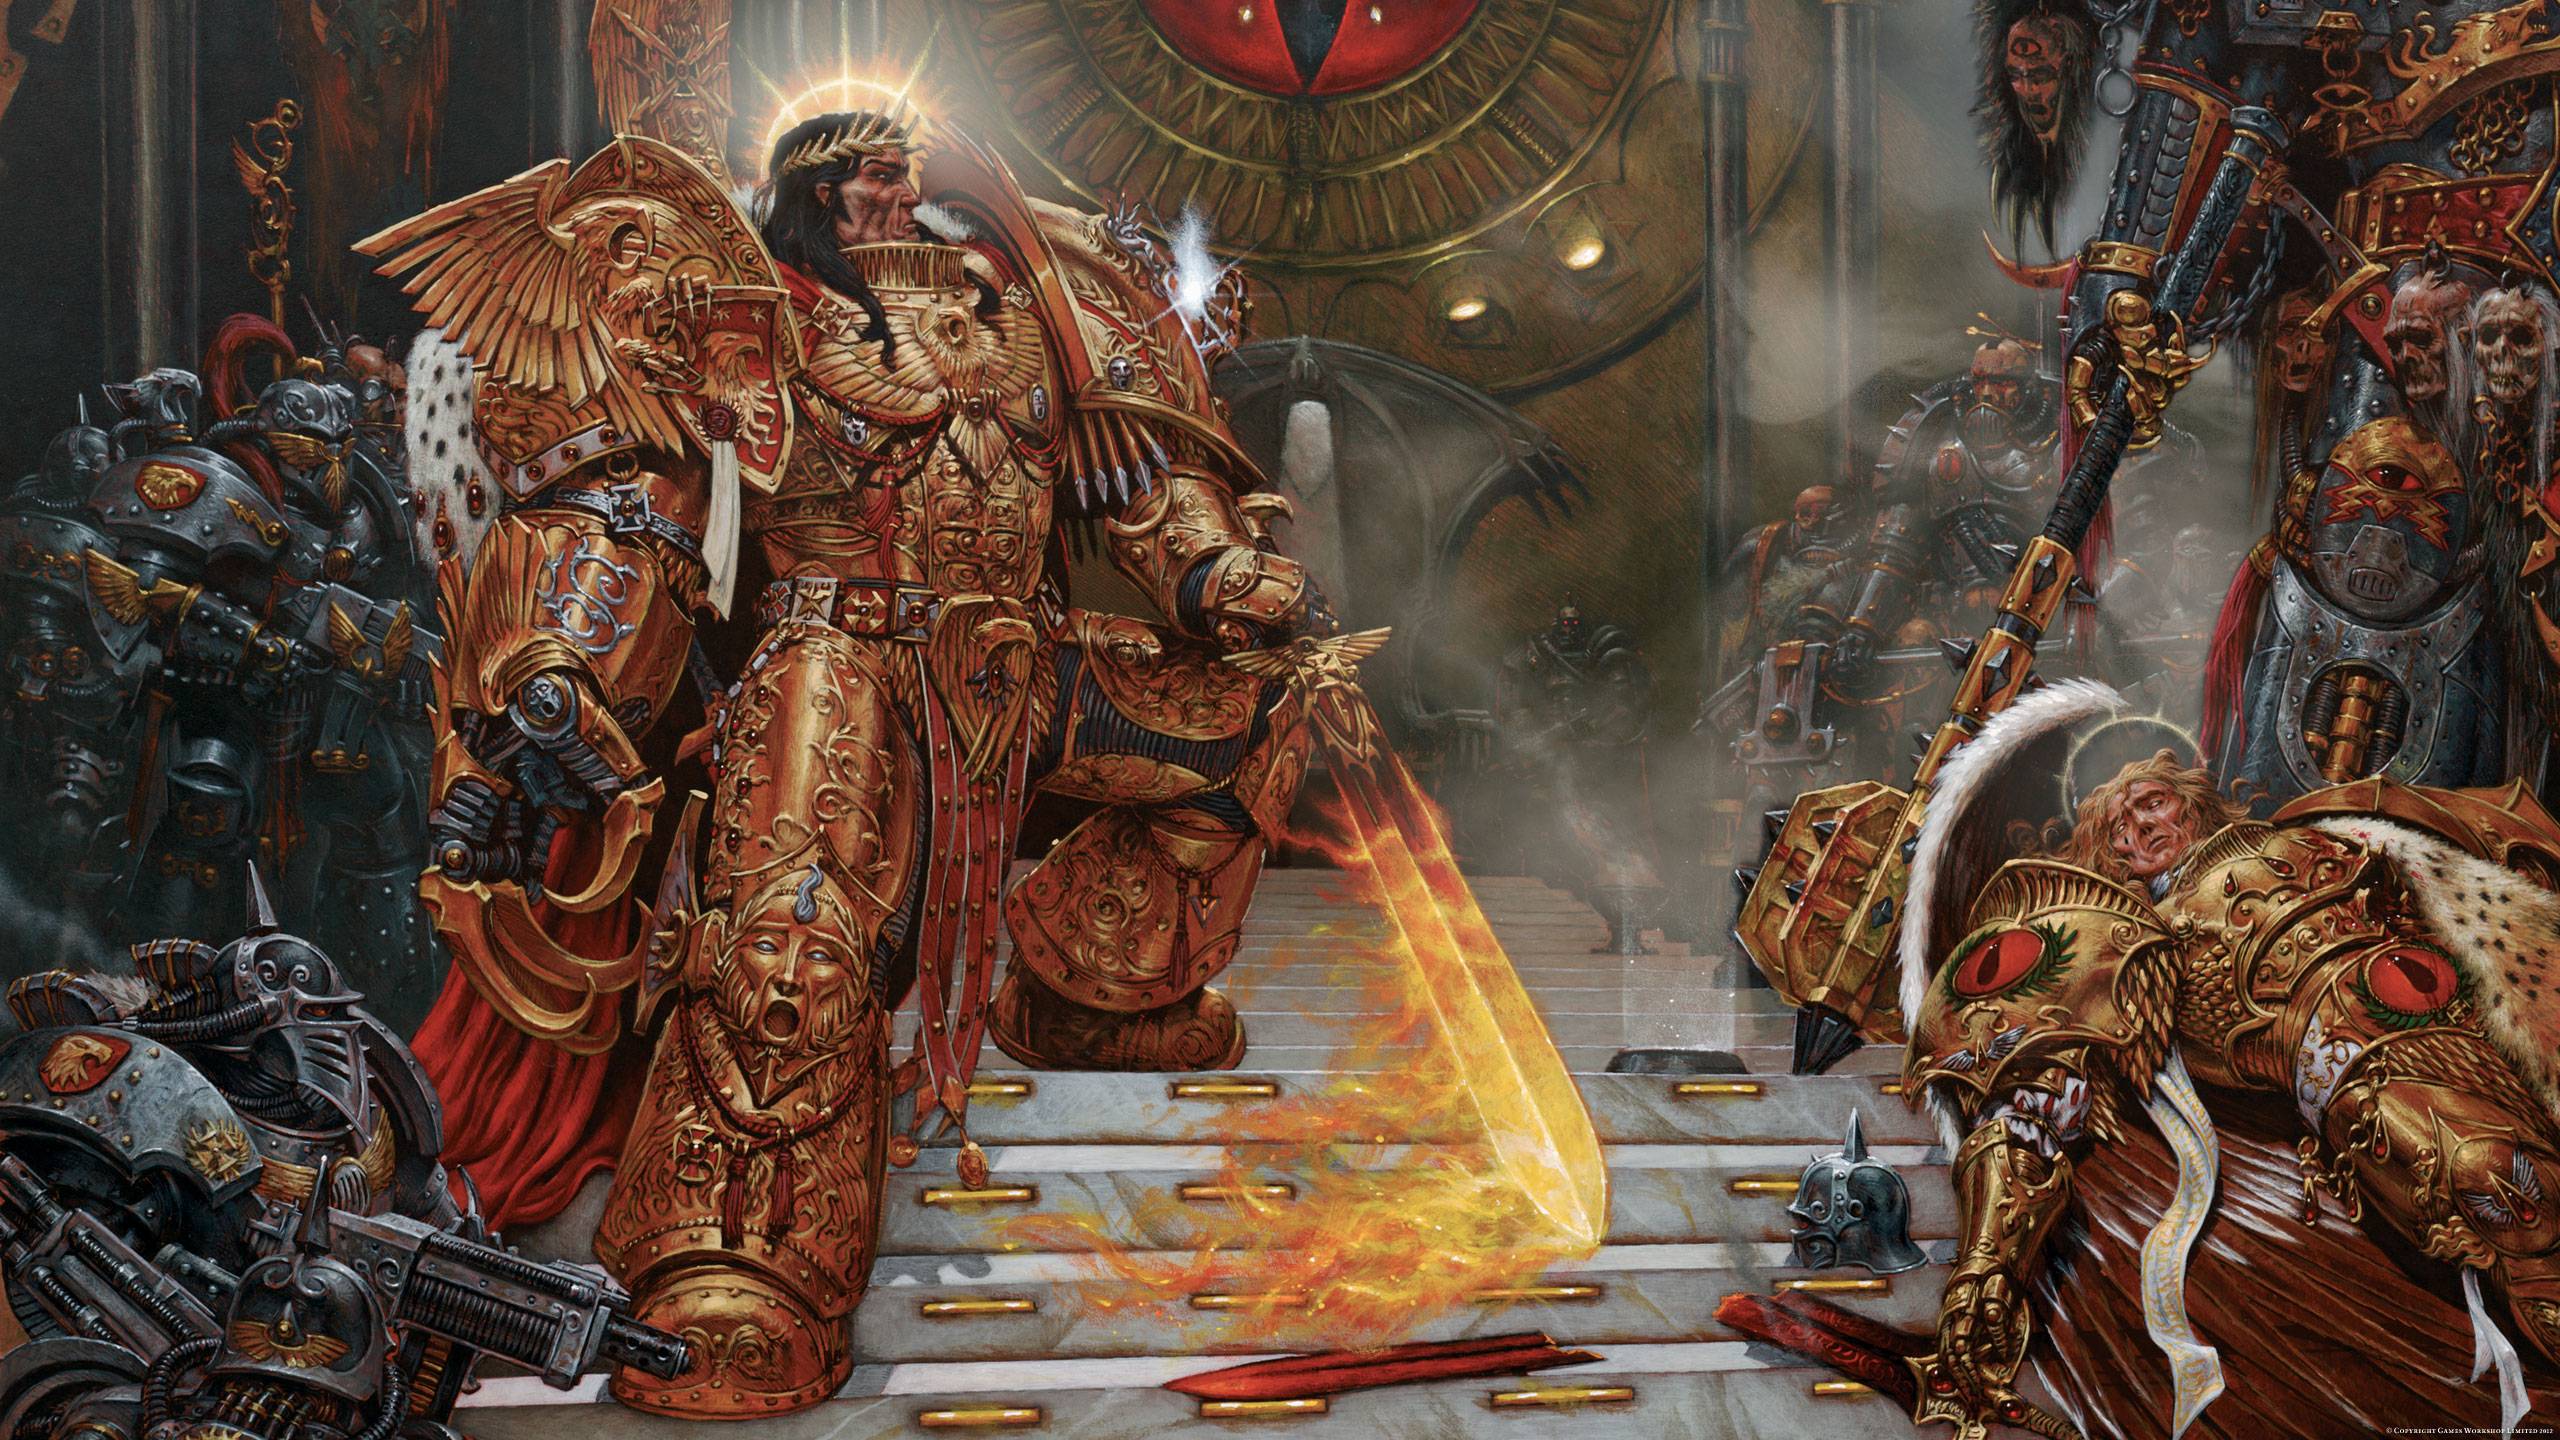 warhammer 40k wallpaper hd,mythology,cg artwork,art,strategy video game,middle ages